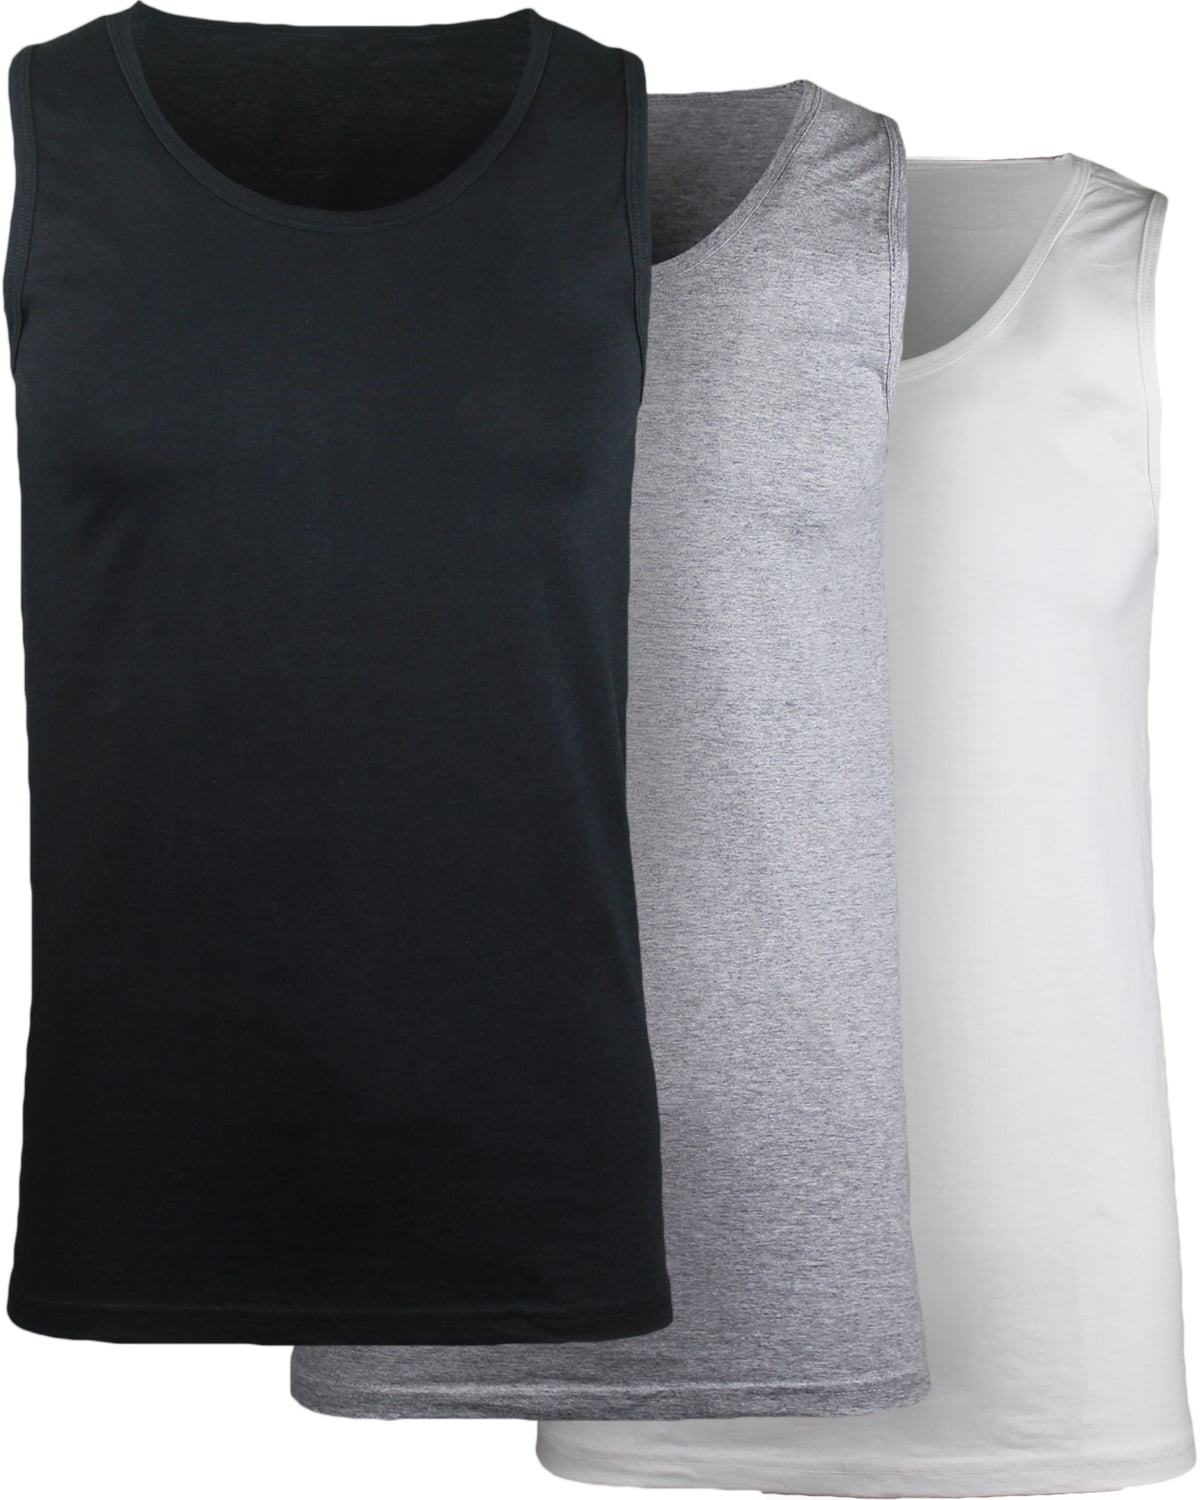 ShirtBANC - ShirtBANC Premium Mens Blank Tank Top Shirts Everyday Fresh ...